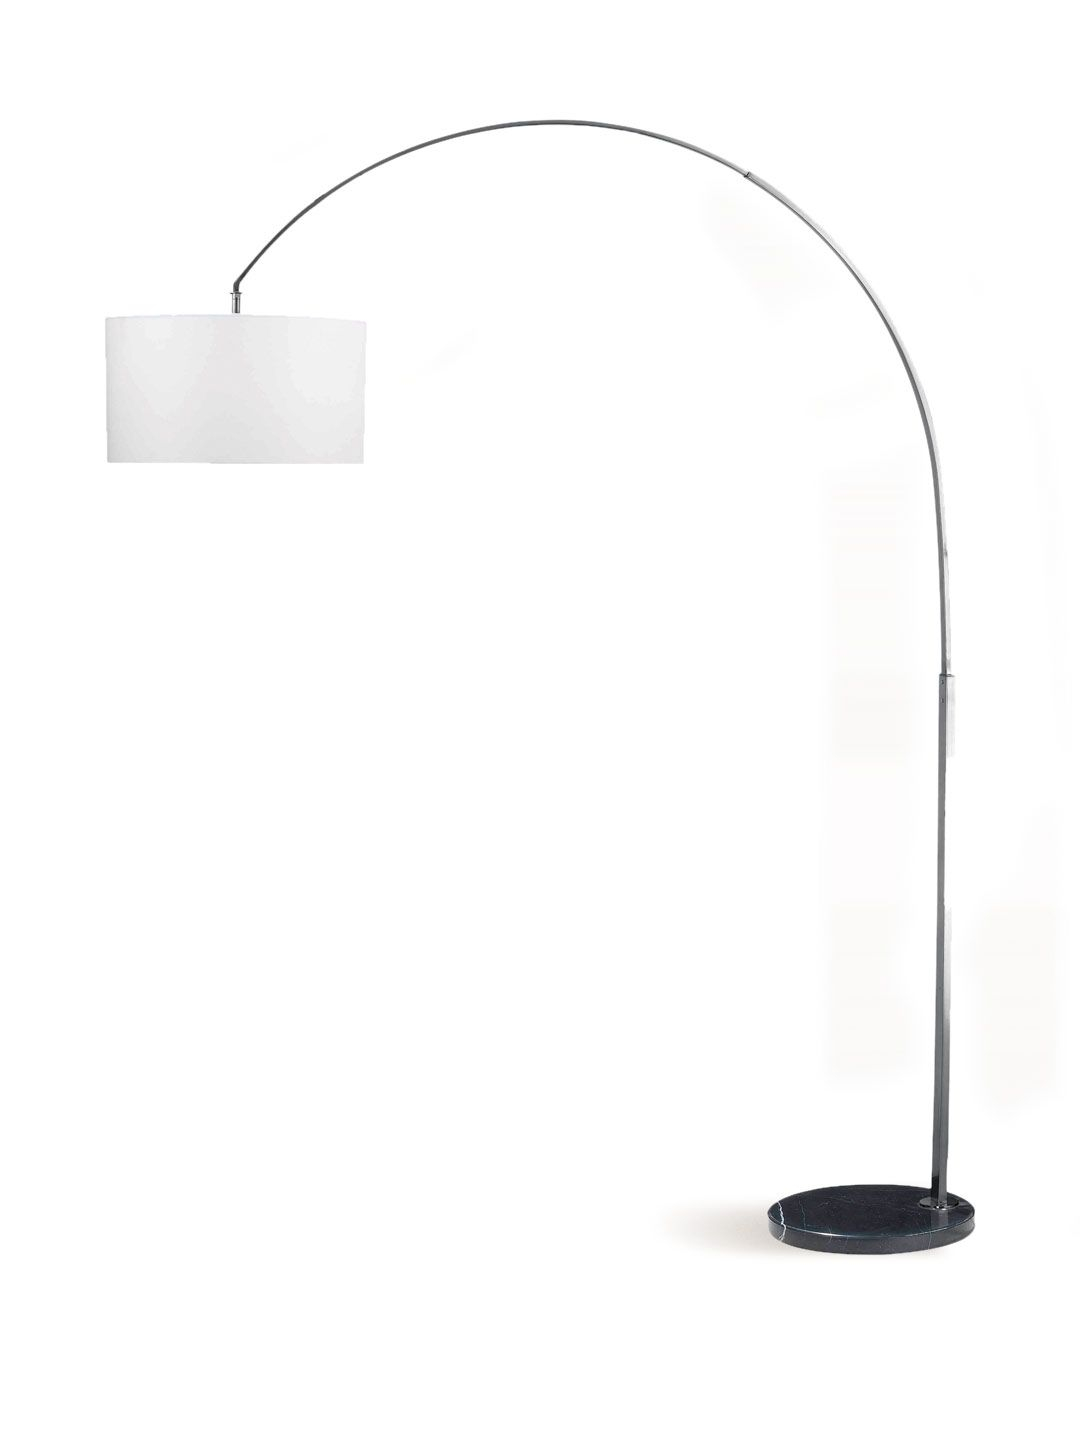 Design Craft Normandy Arc Floor Lamp 313 79 Gilt throughout sizing 1080 X 1440